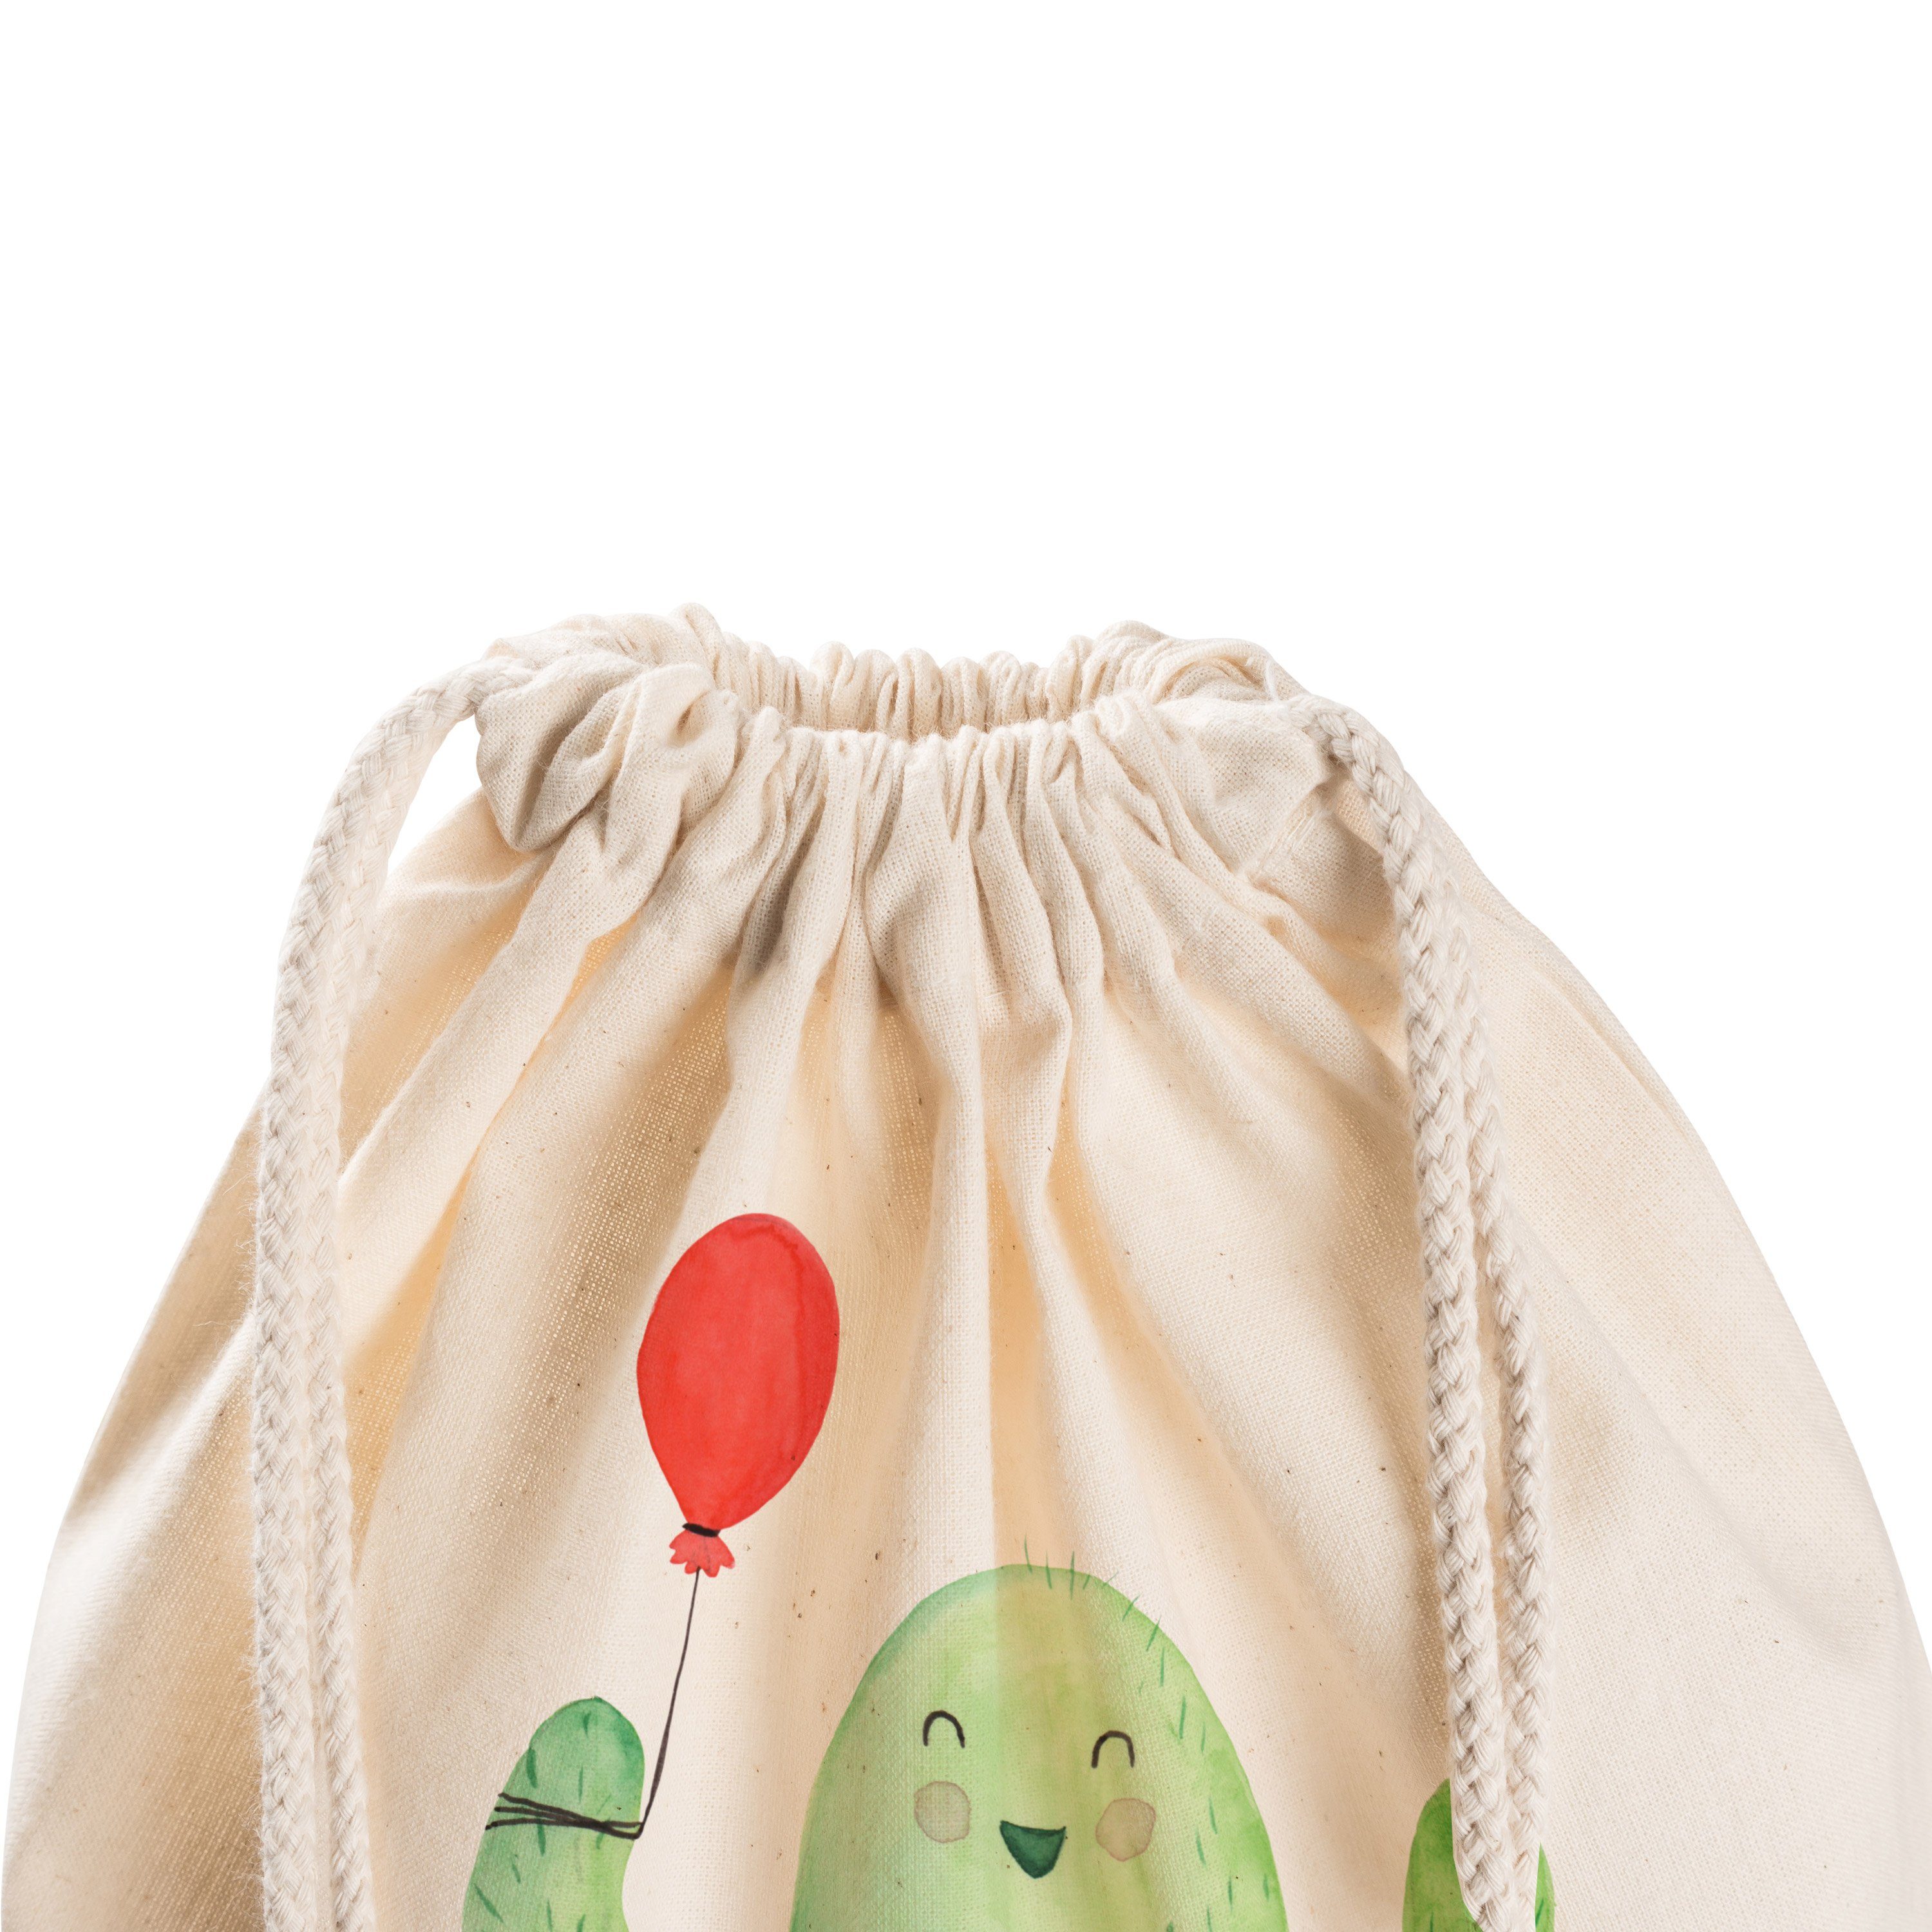 Stoffbeutel, Sporttasche Geschenk, Transparent & Panda Luftballon Mr. Mrs. (1-tlg) Kaktus - - Sportbeutel,